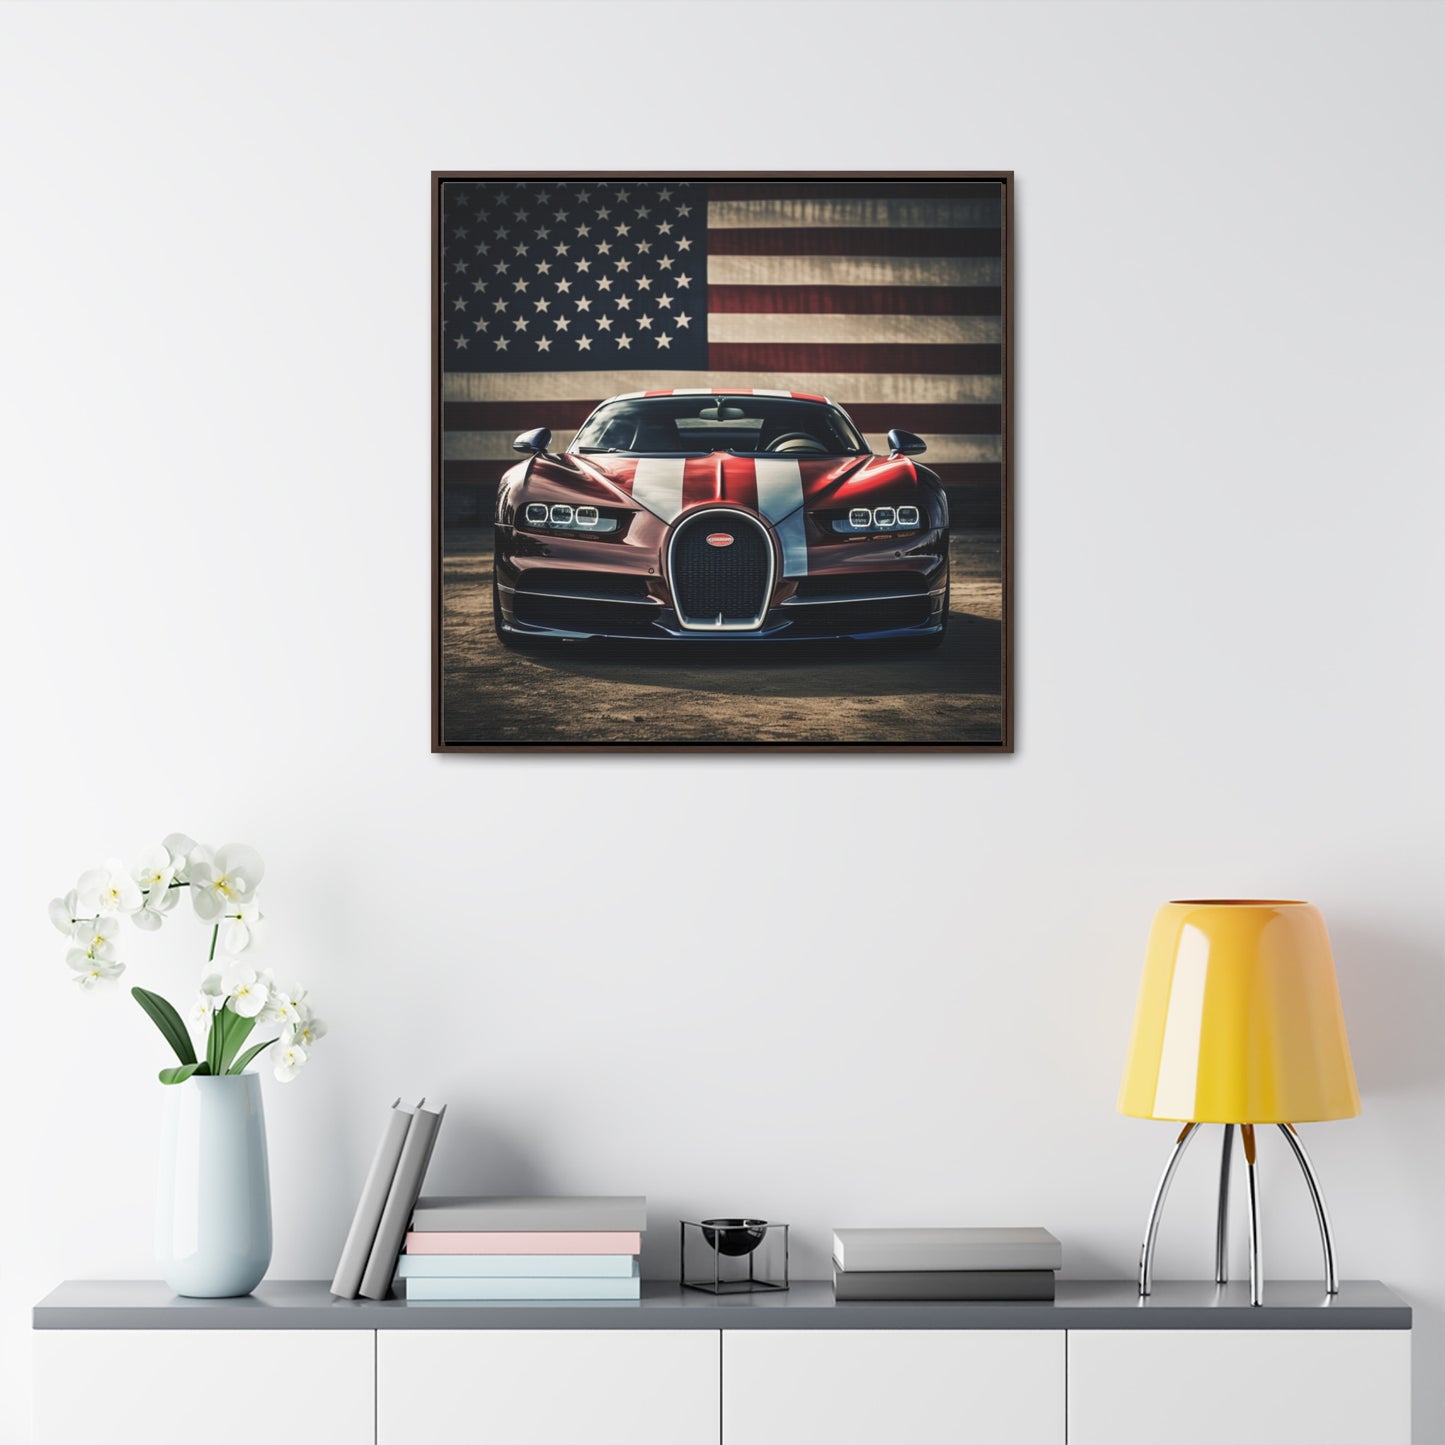 Gallery Canvas Wraps, Square Frame Bugatti Flag 1